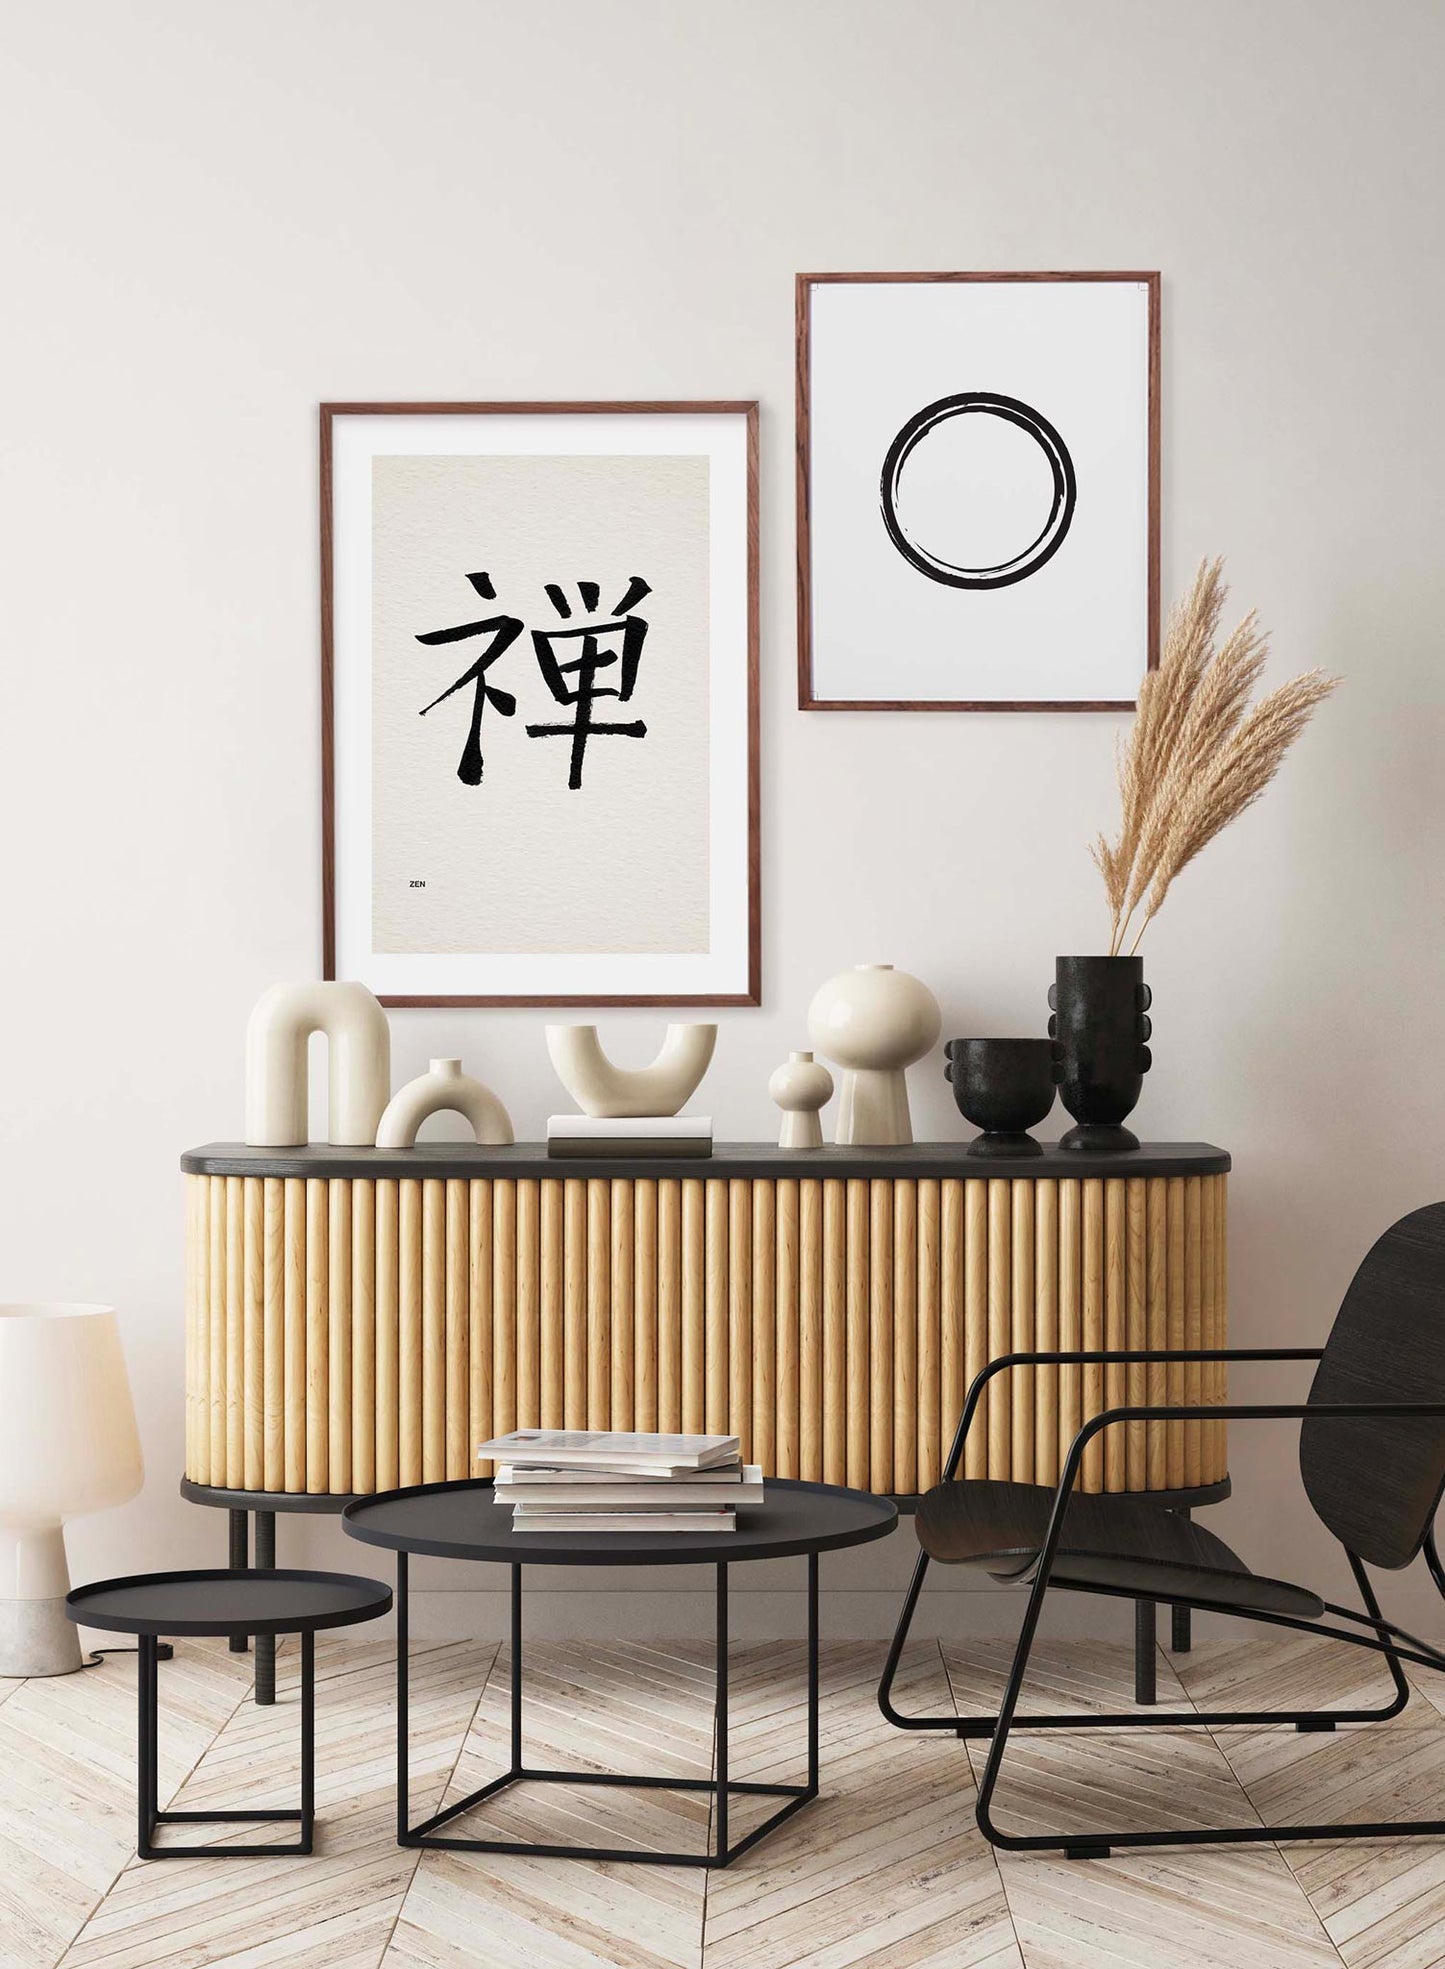 Zen Symbol is a minimalist typography by Opposite Wall of the Japanese word "Zen" written in ink.